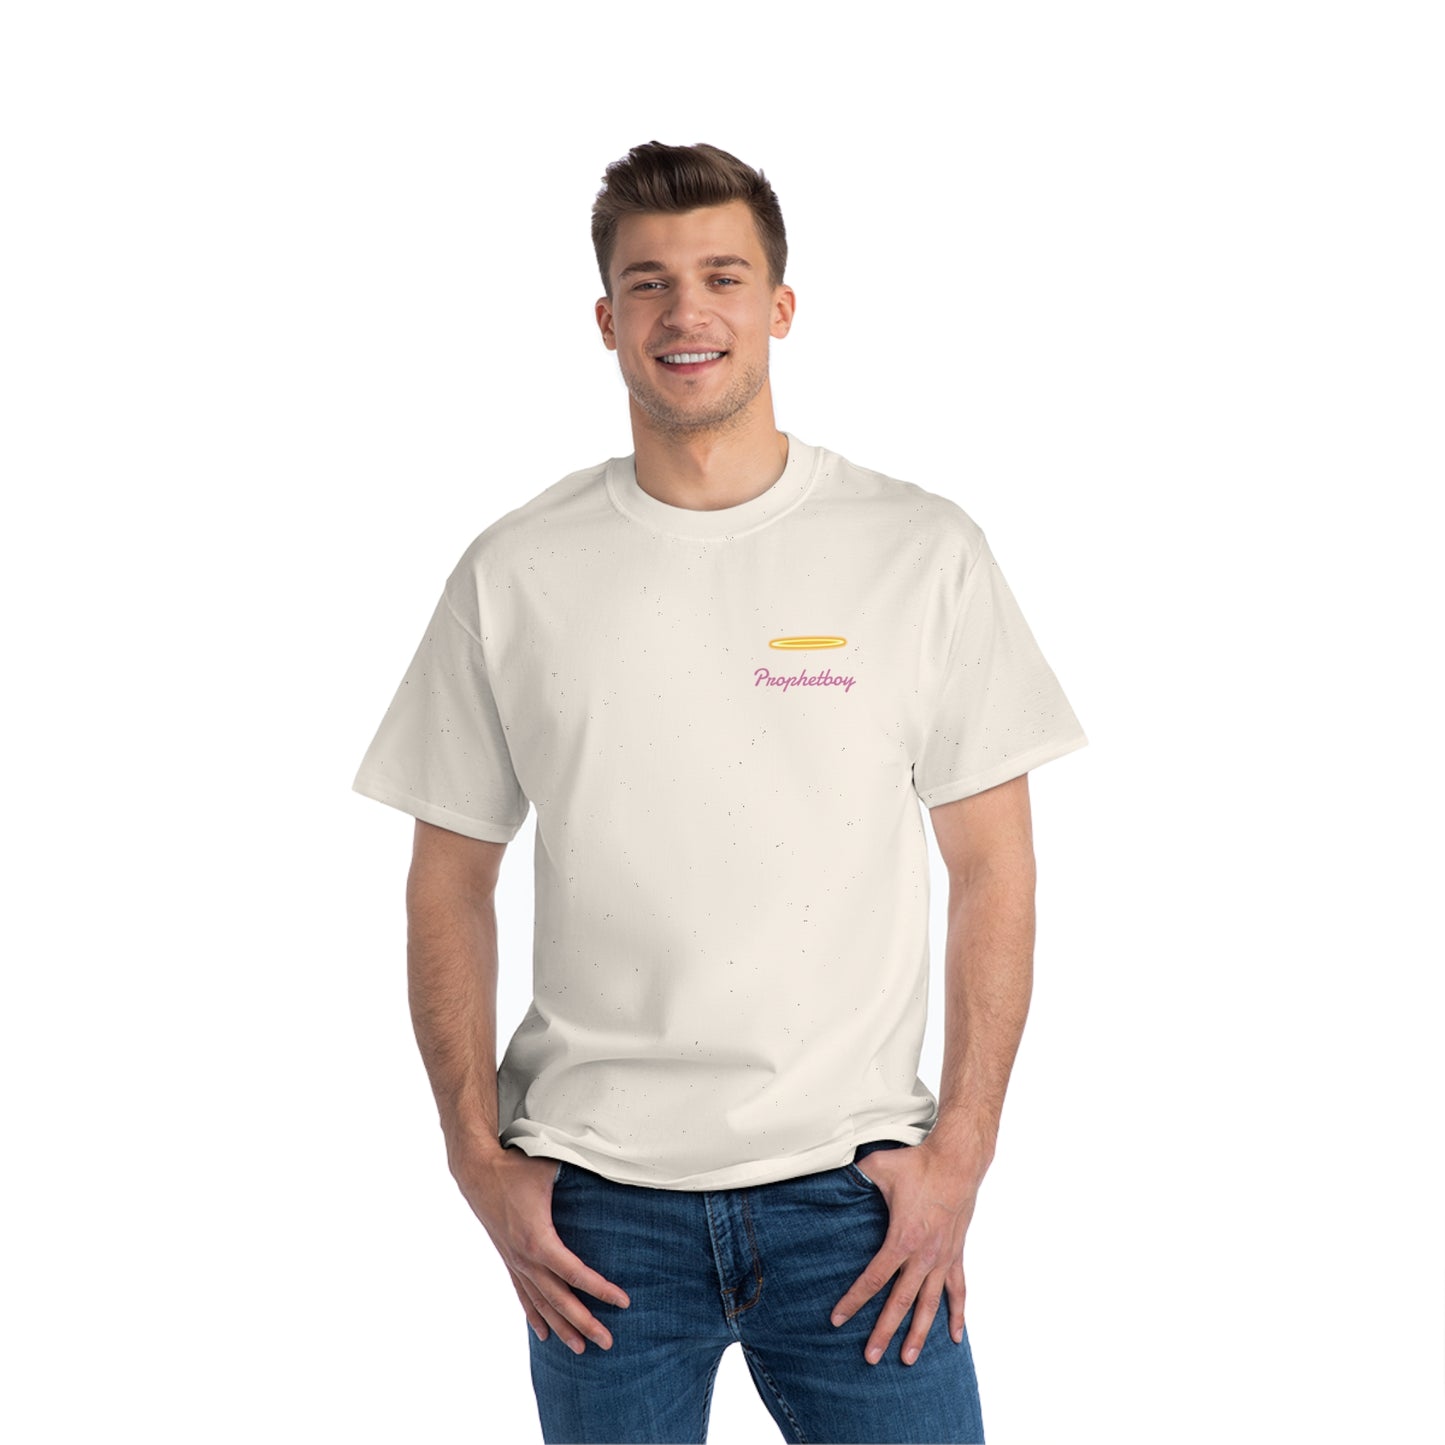 Prophetboy "PROPHETIC HOOPS" Short-Sleeve T-Shirt